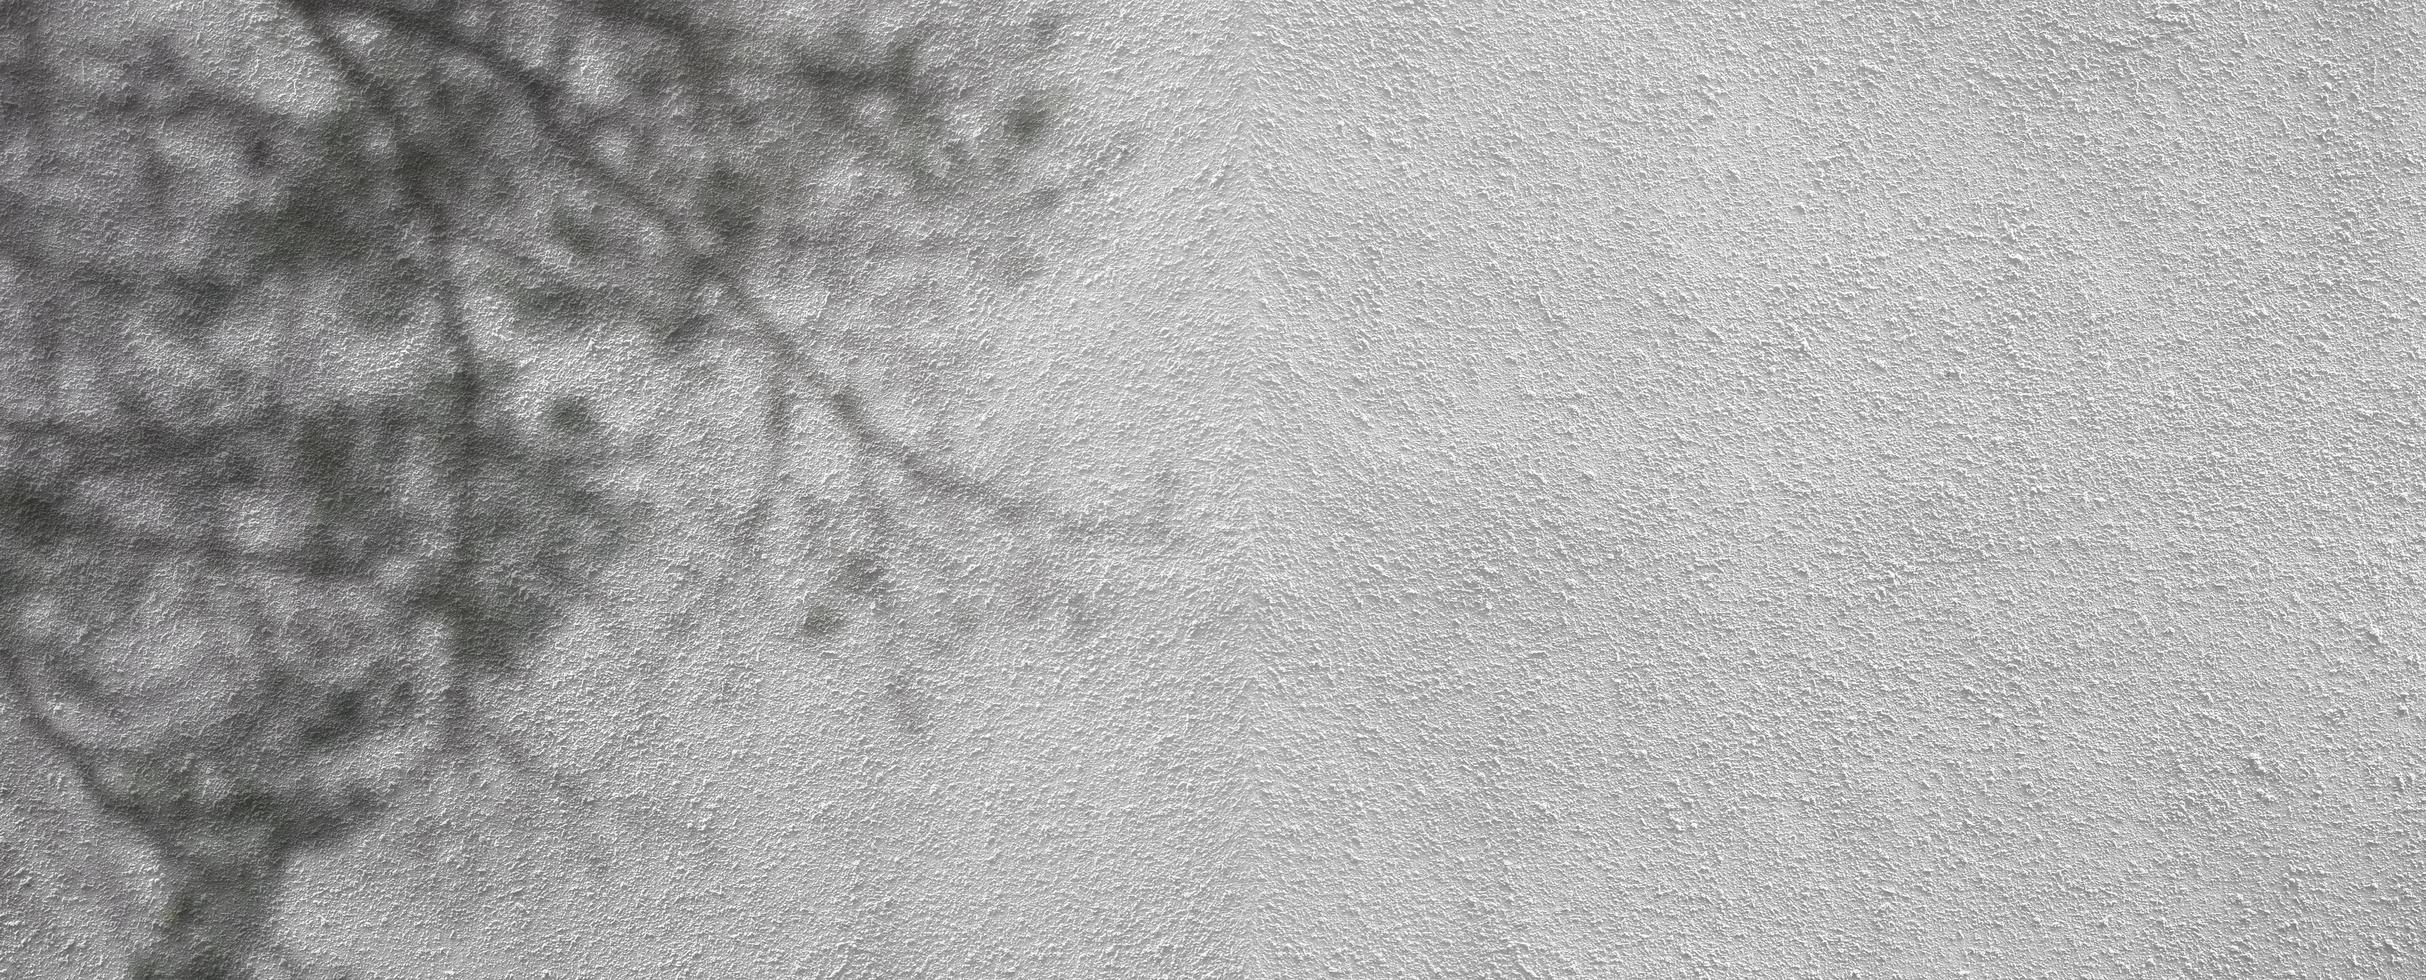 Fondo de textura de pared de cemento blanco con textura rugosa de sombra de árbol foto